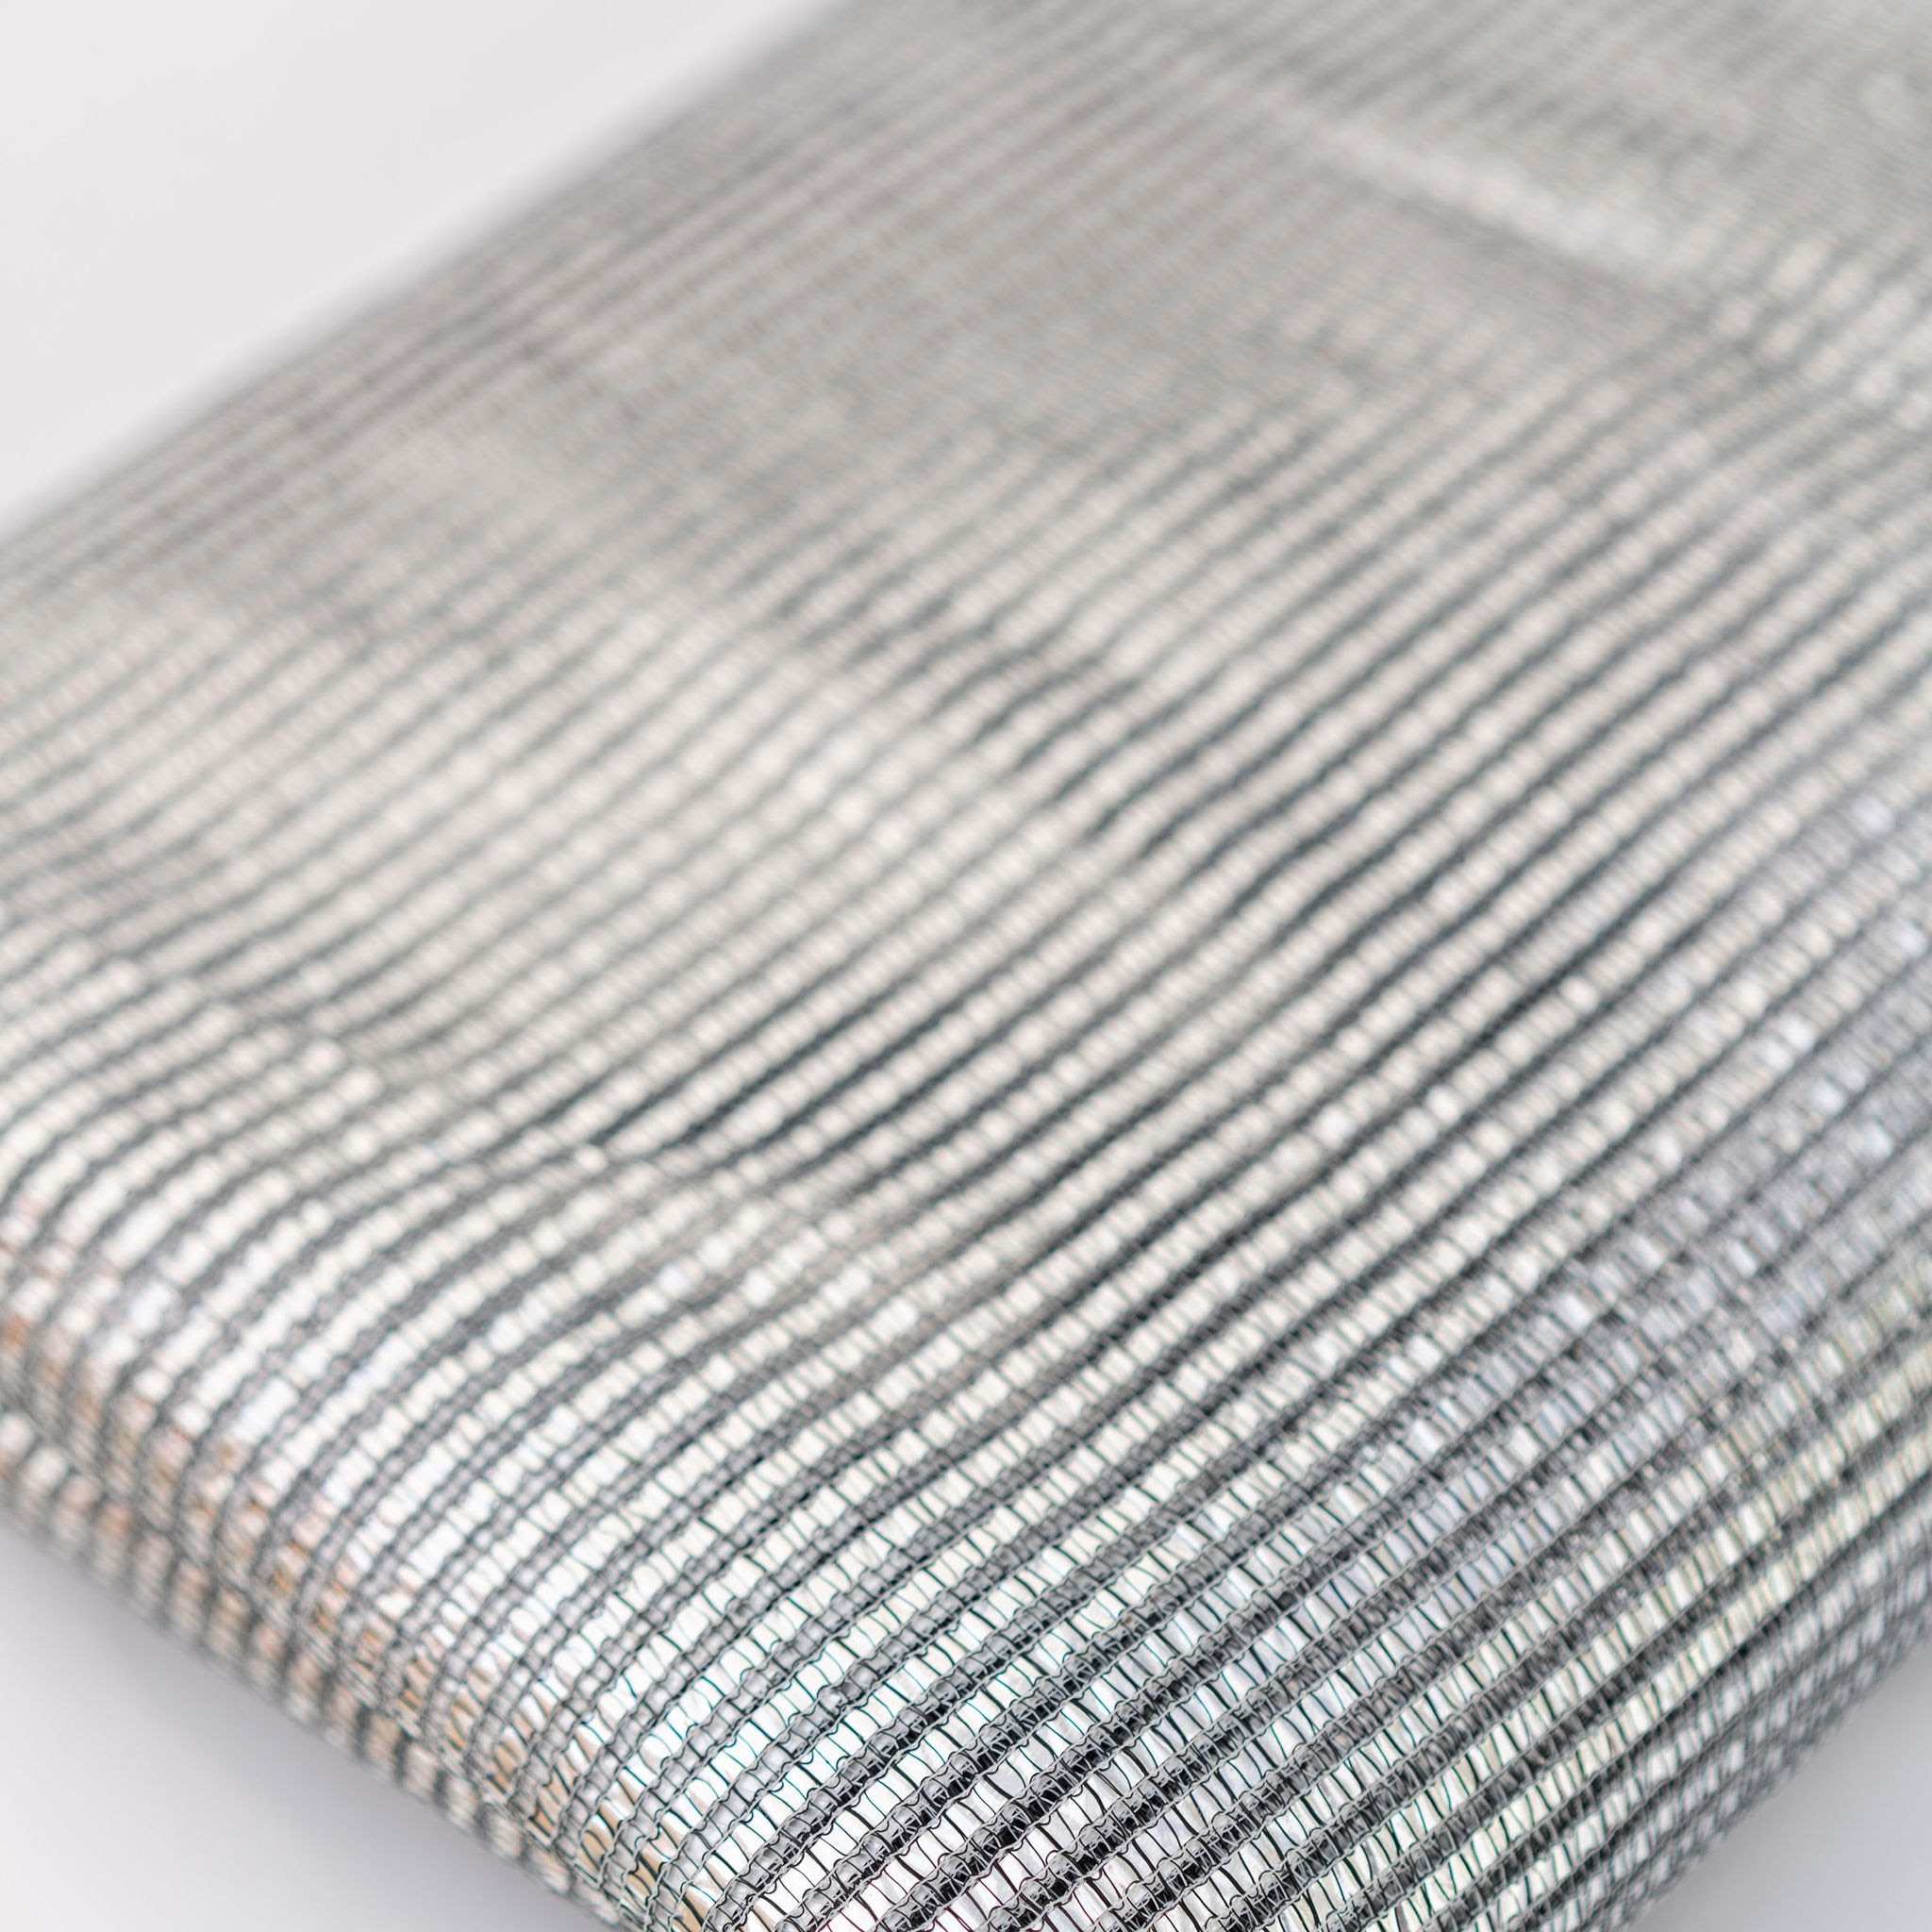 Shade Fabric Clips - American Nettings